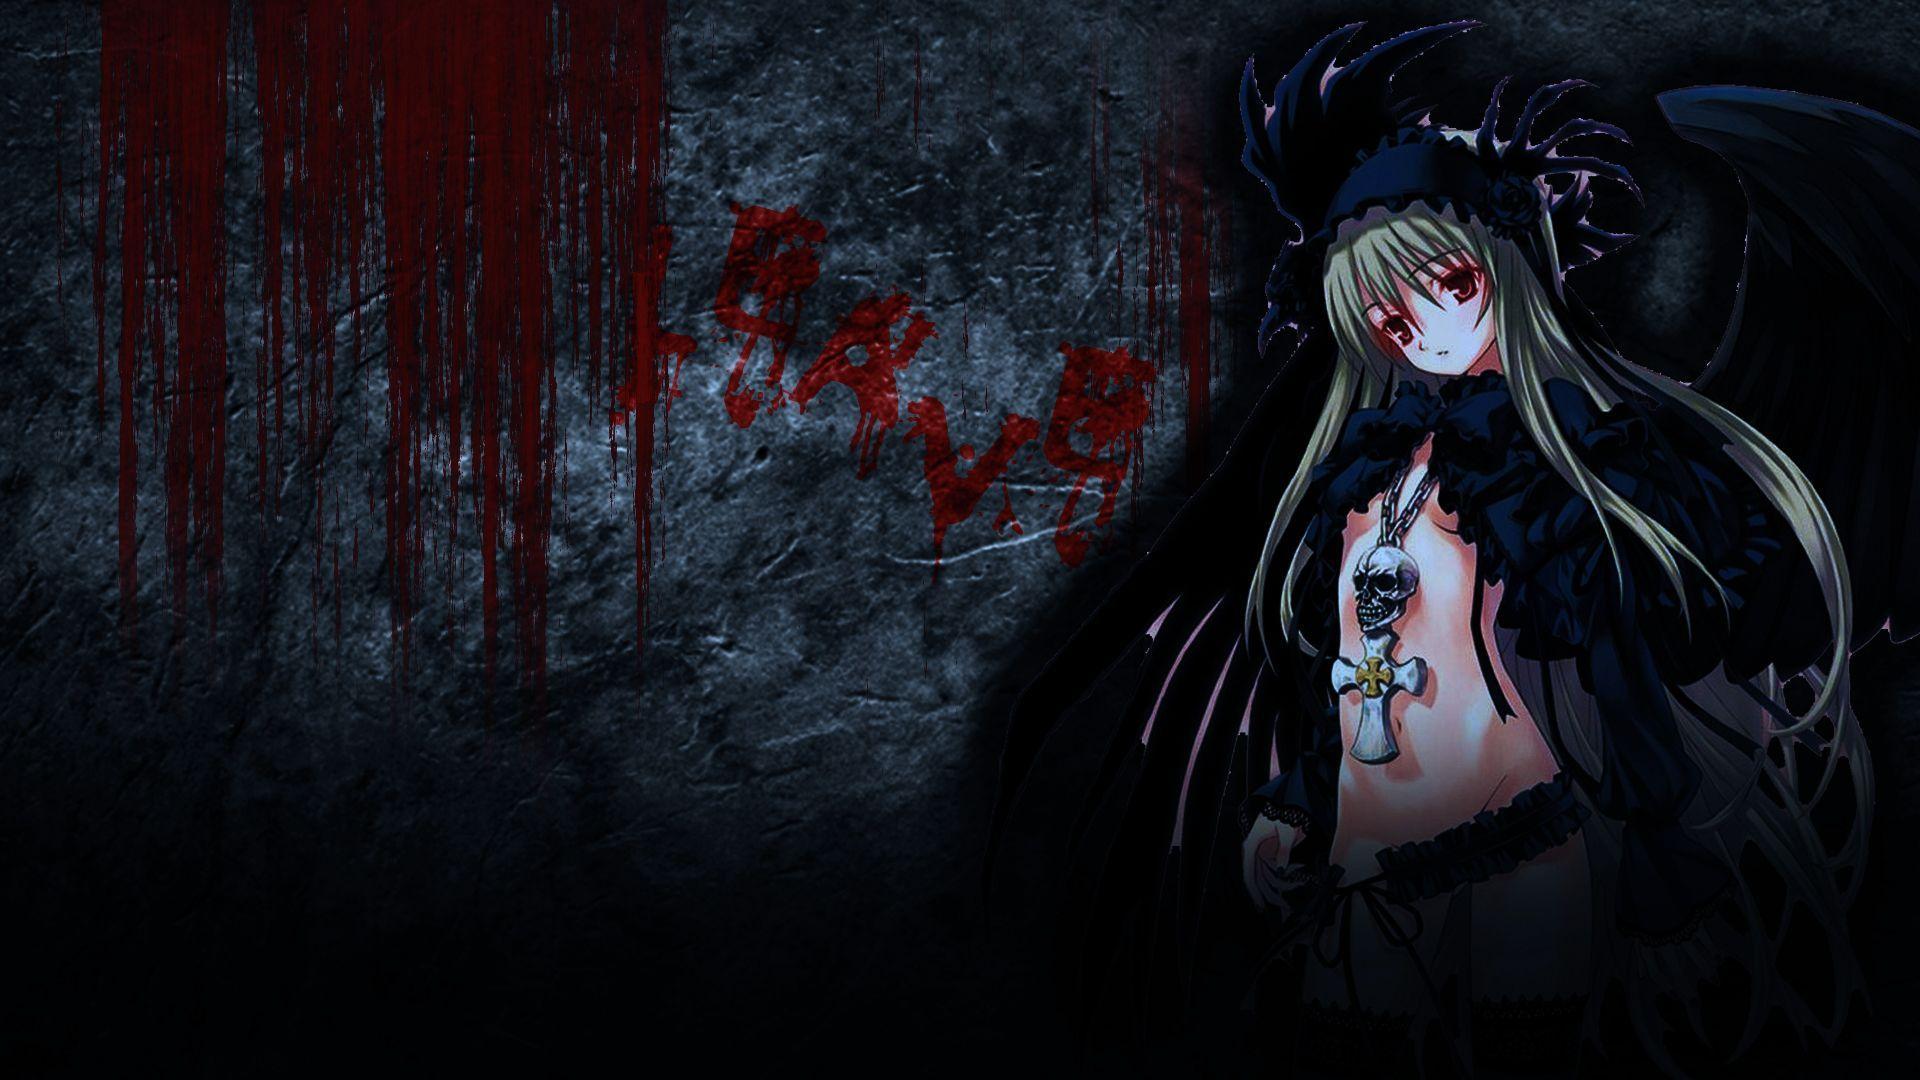 Cool Dark Anime Wallpapers - Top Free Cool Dark Anime ...